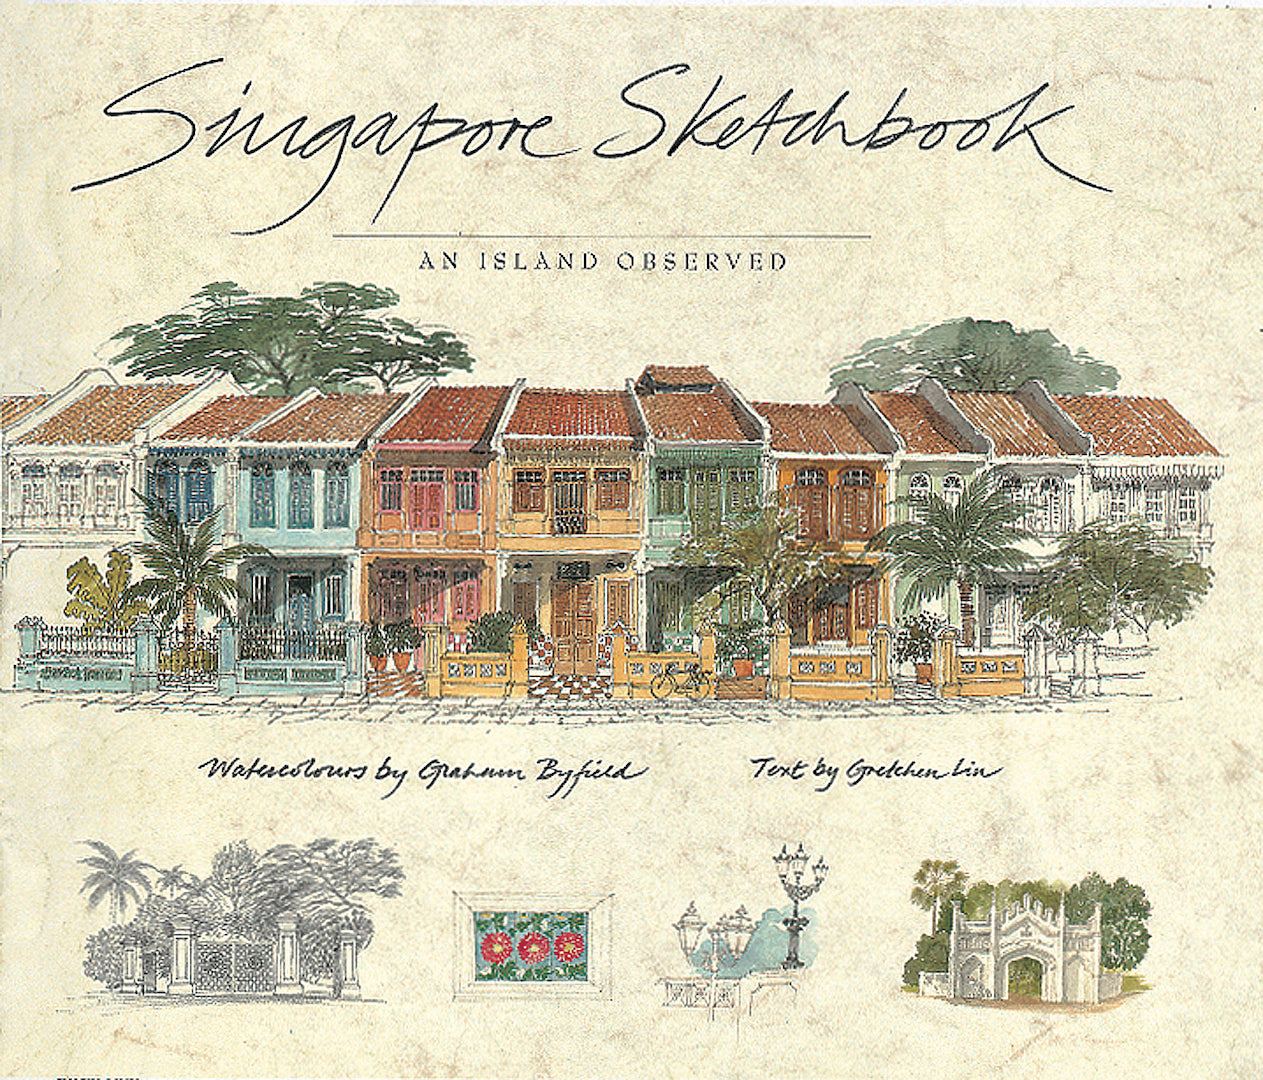 Singapore Sketchbook (Revised Edition)